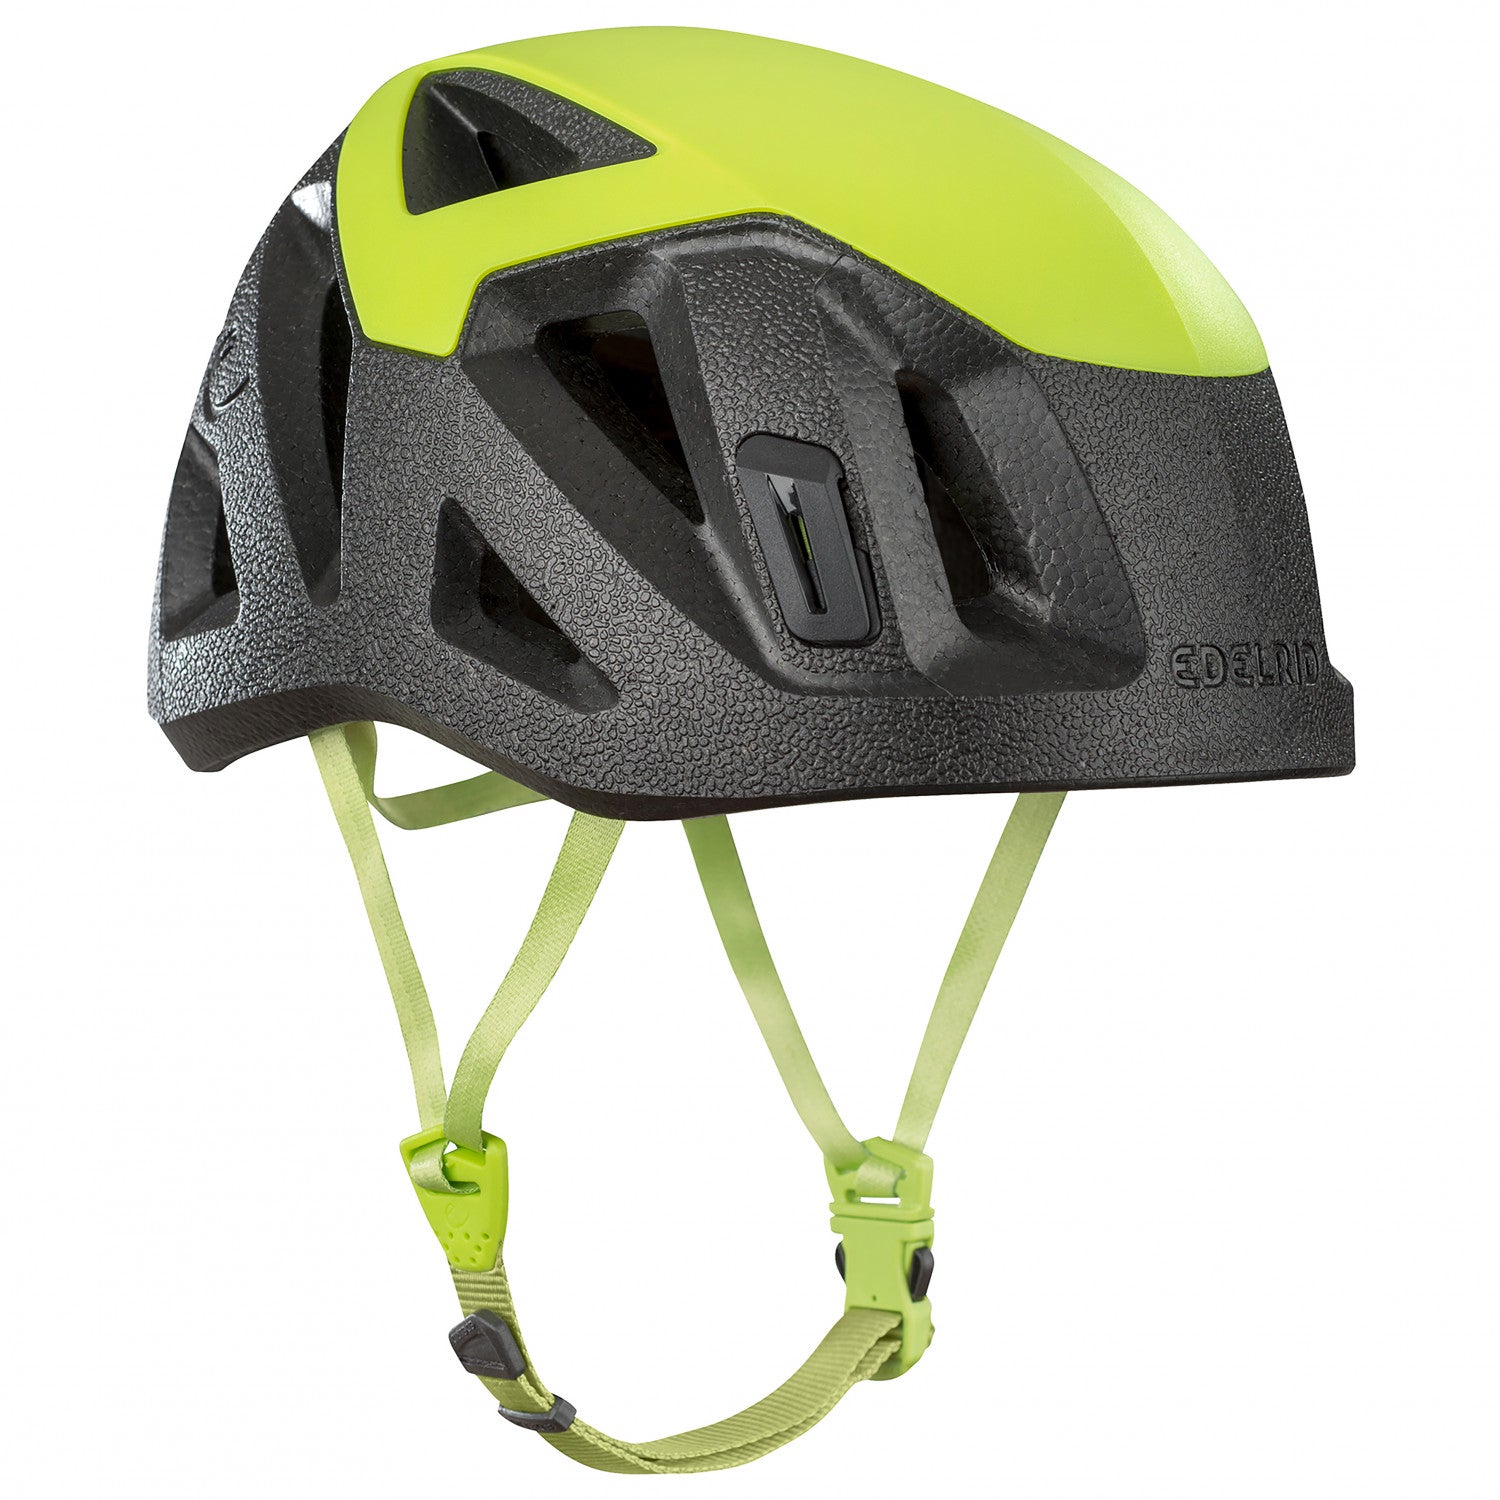 Side of Edelrid Salathe Helmet in Black & Green colours